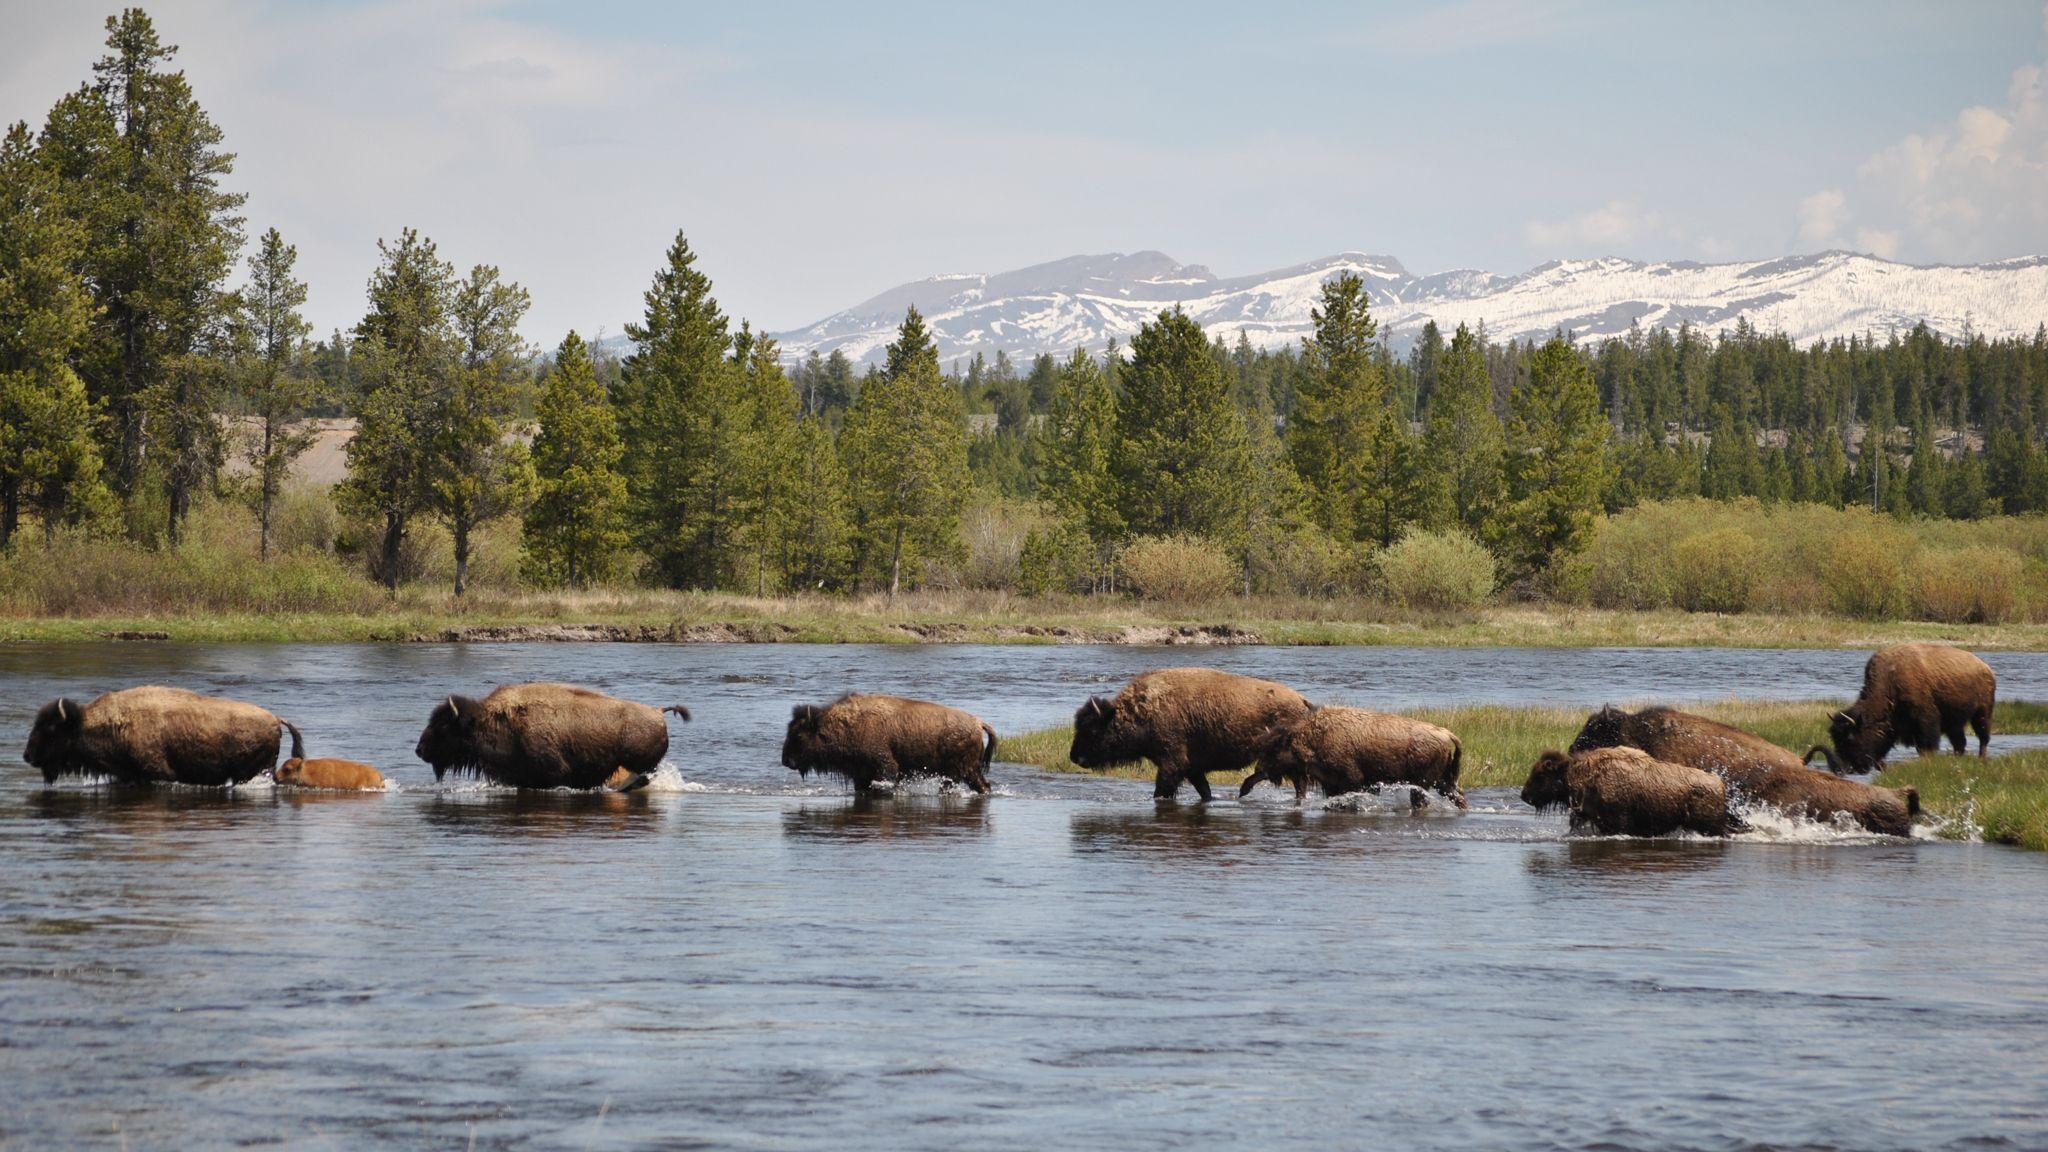 The Buffalo Brigade Protecting Yellowstone's Noble Beasts